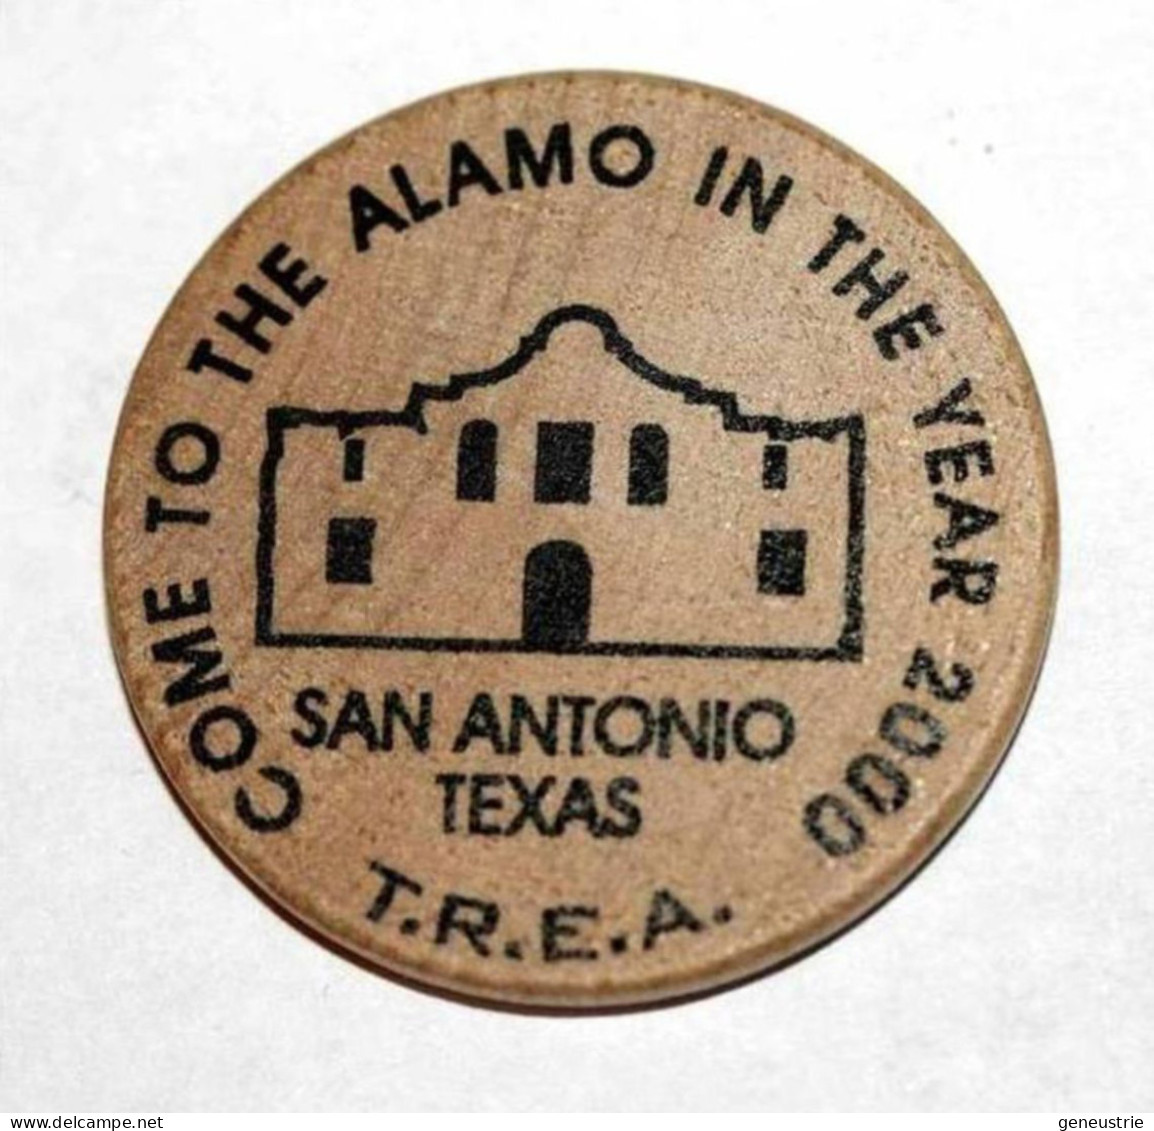 Wooden Token - Wooden Nickel - Jeton Bois Monnaie Nécessité - Texas San Antonio - Fort Alamo 2000 - Etats-Unis - Monetary/Of Necessity